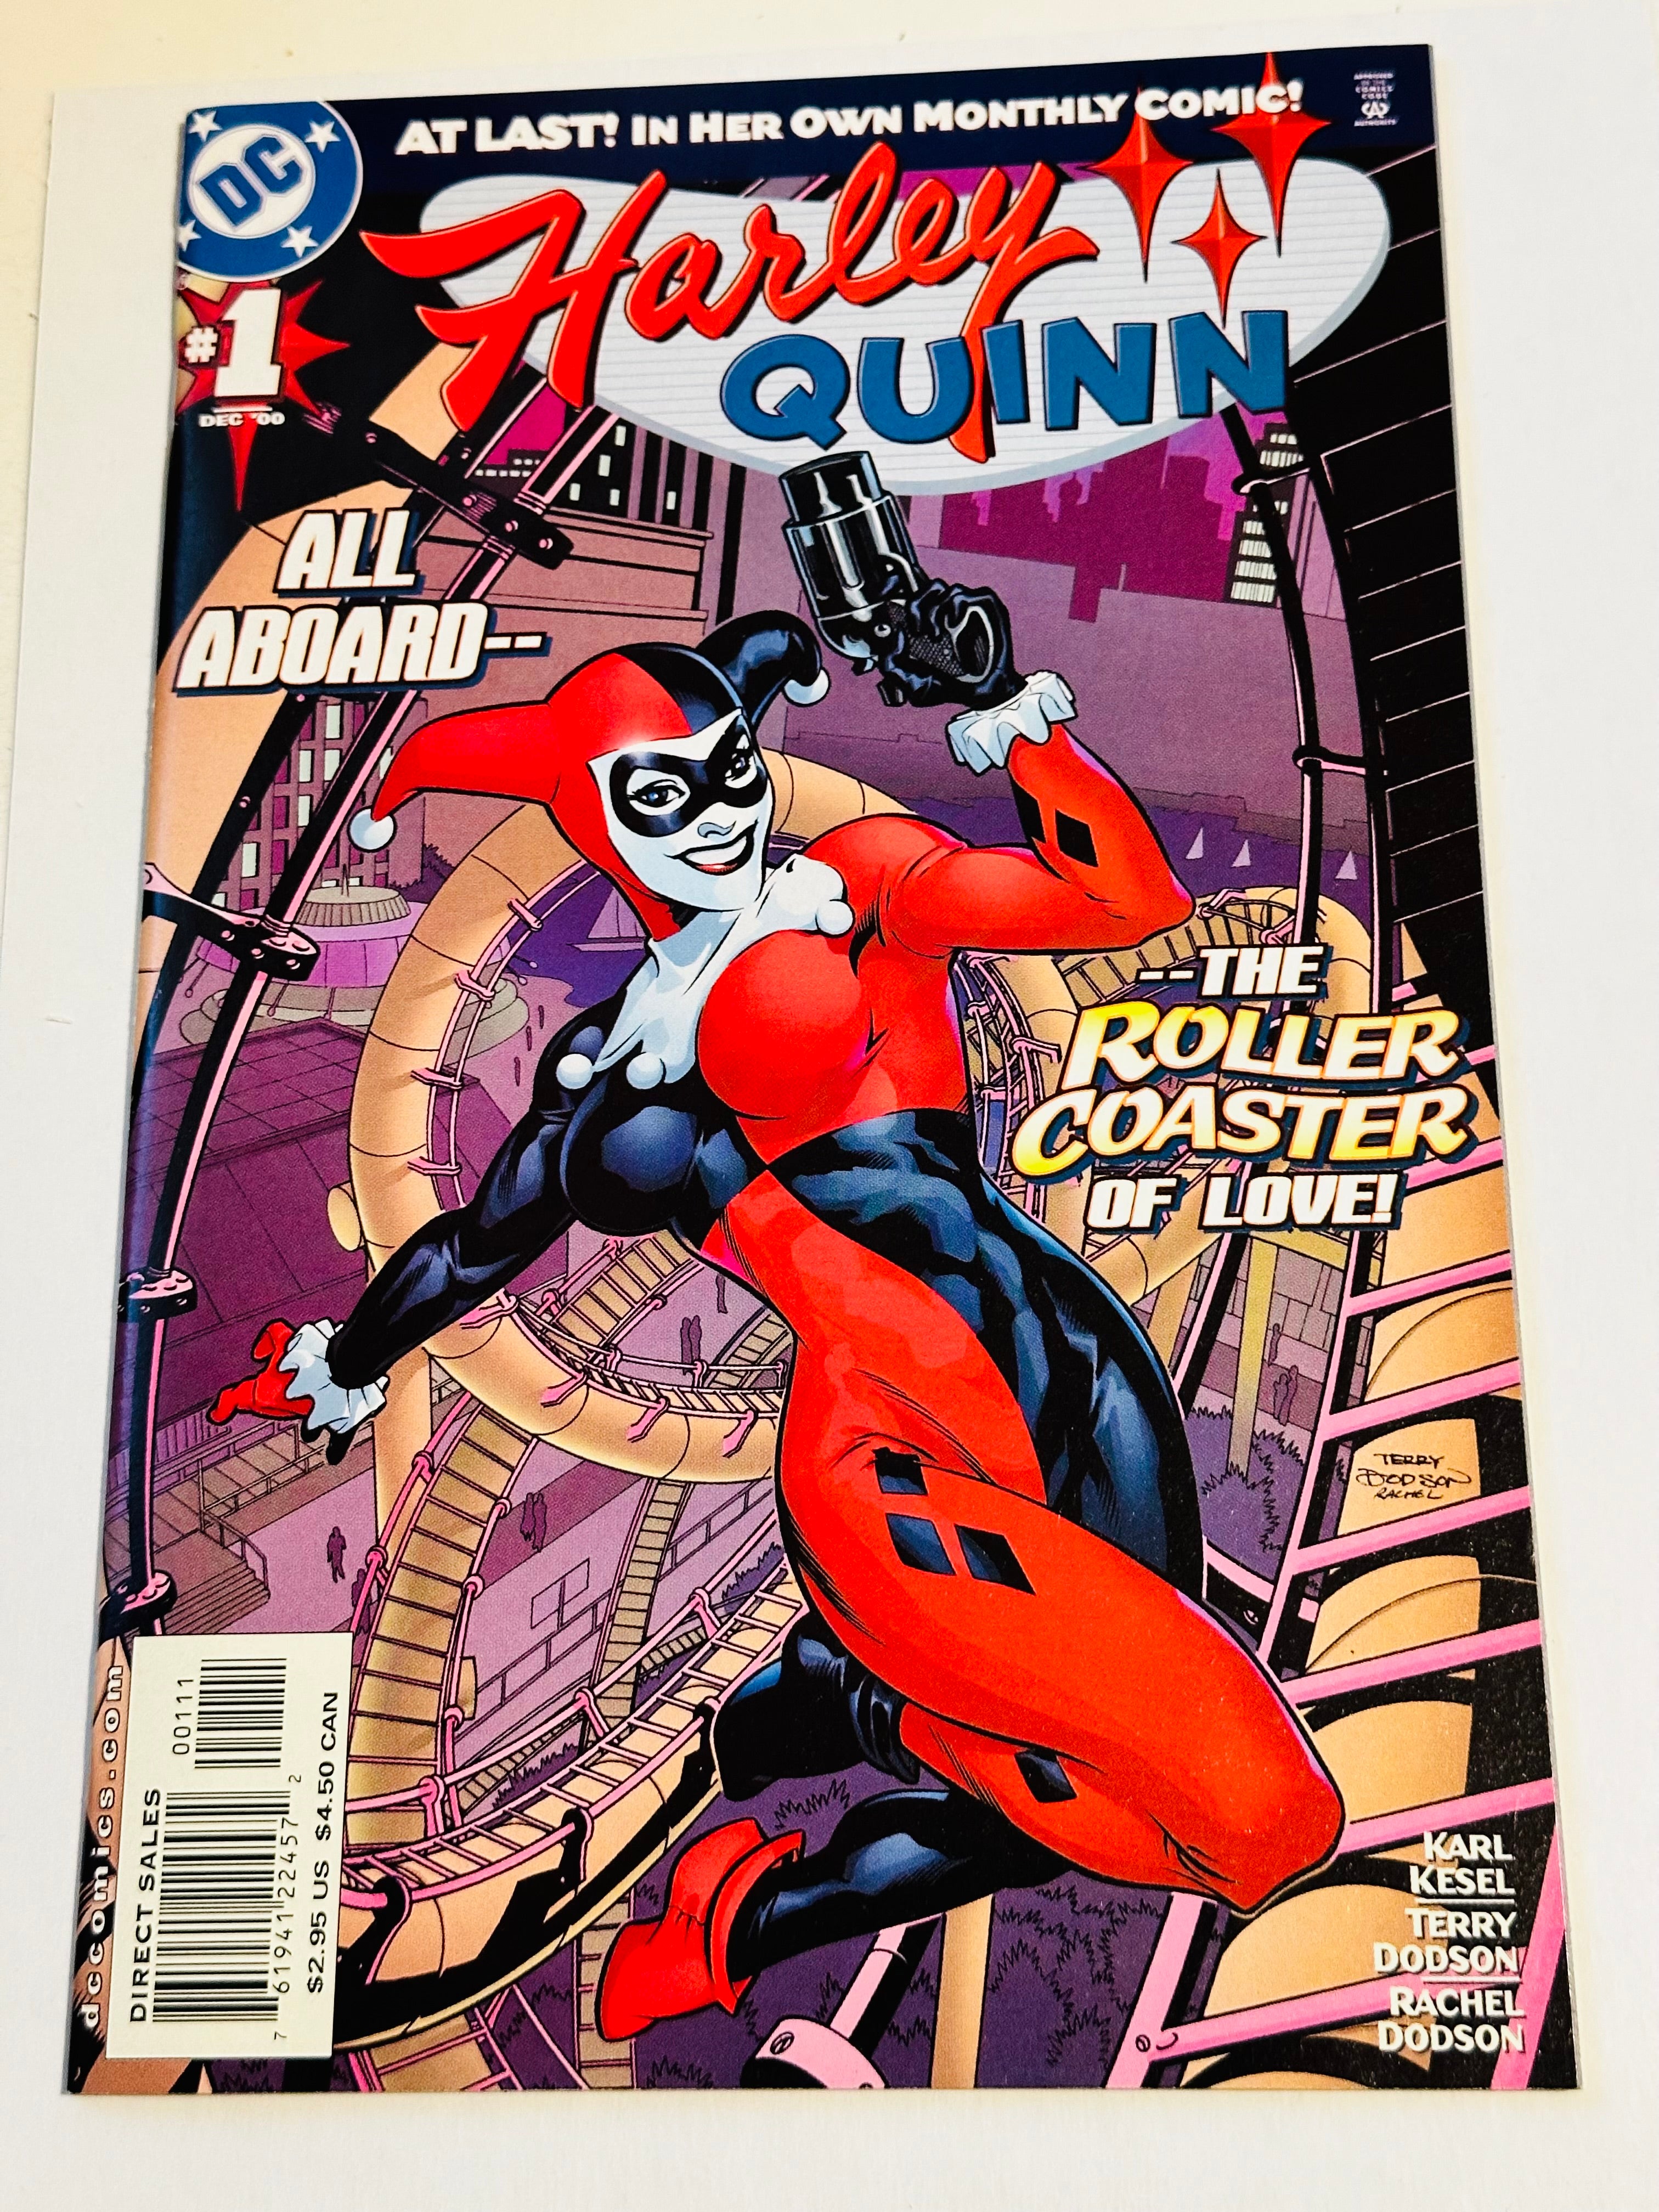 Harley Quinn #1 high-grade condition, book